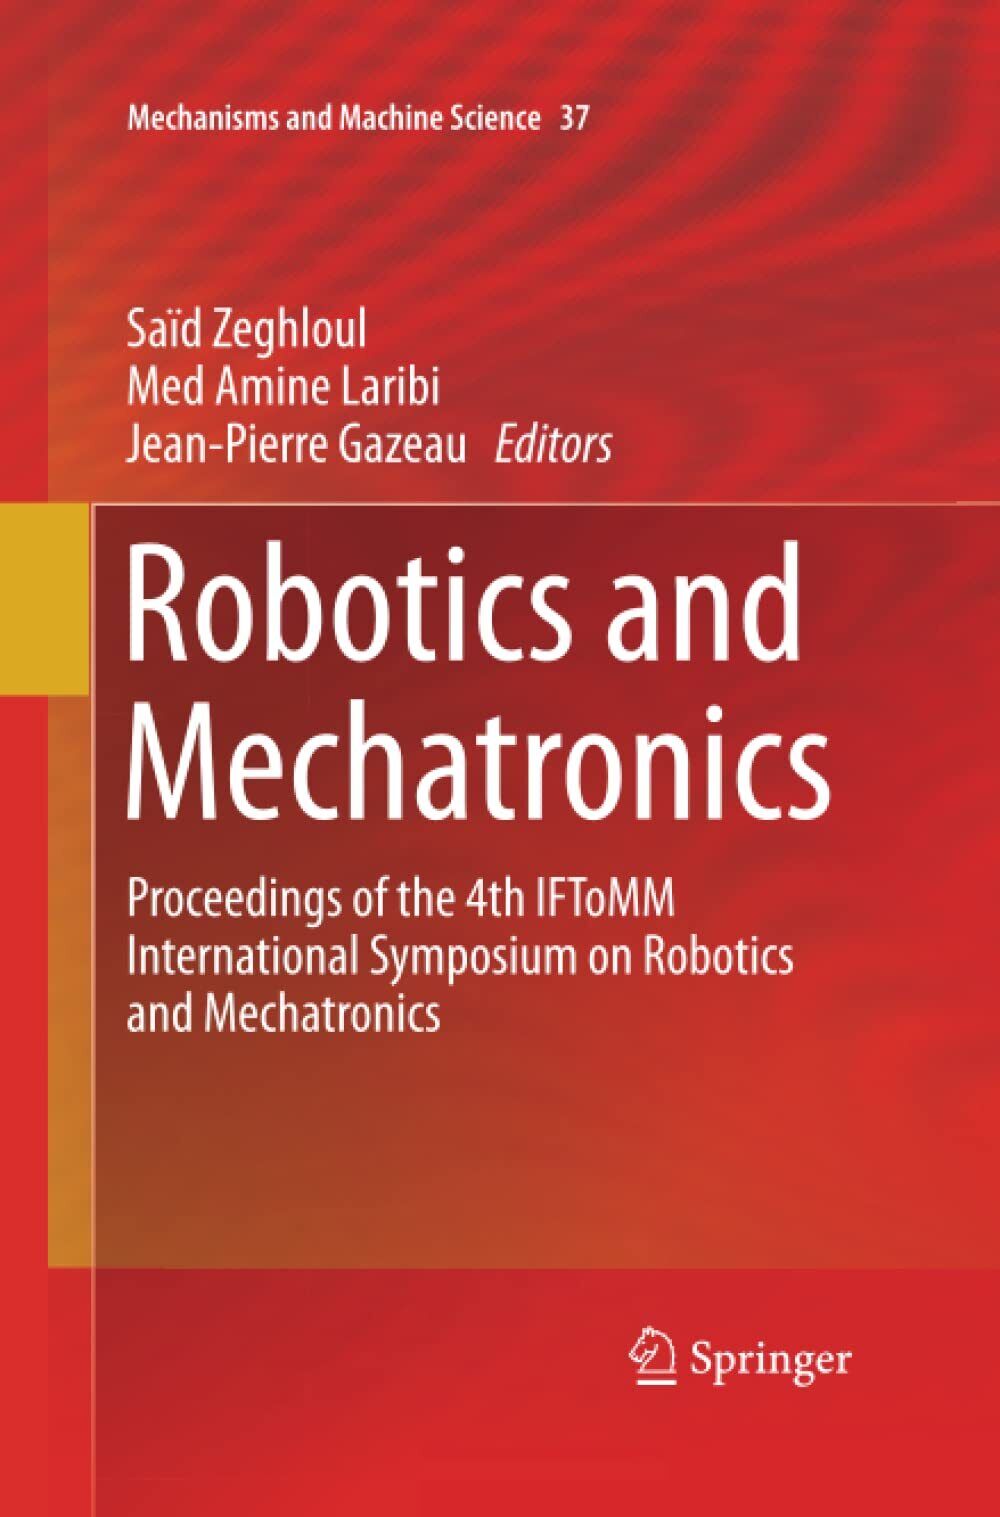 Robotics and Mechatronics - Sa?d Zeghloul - Springer, 2016